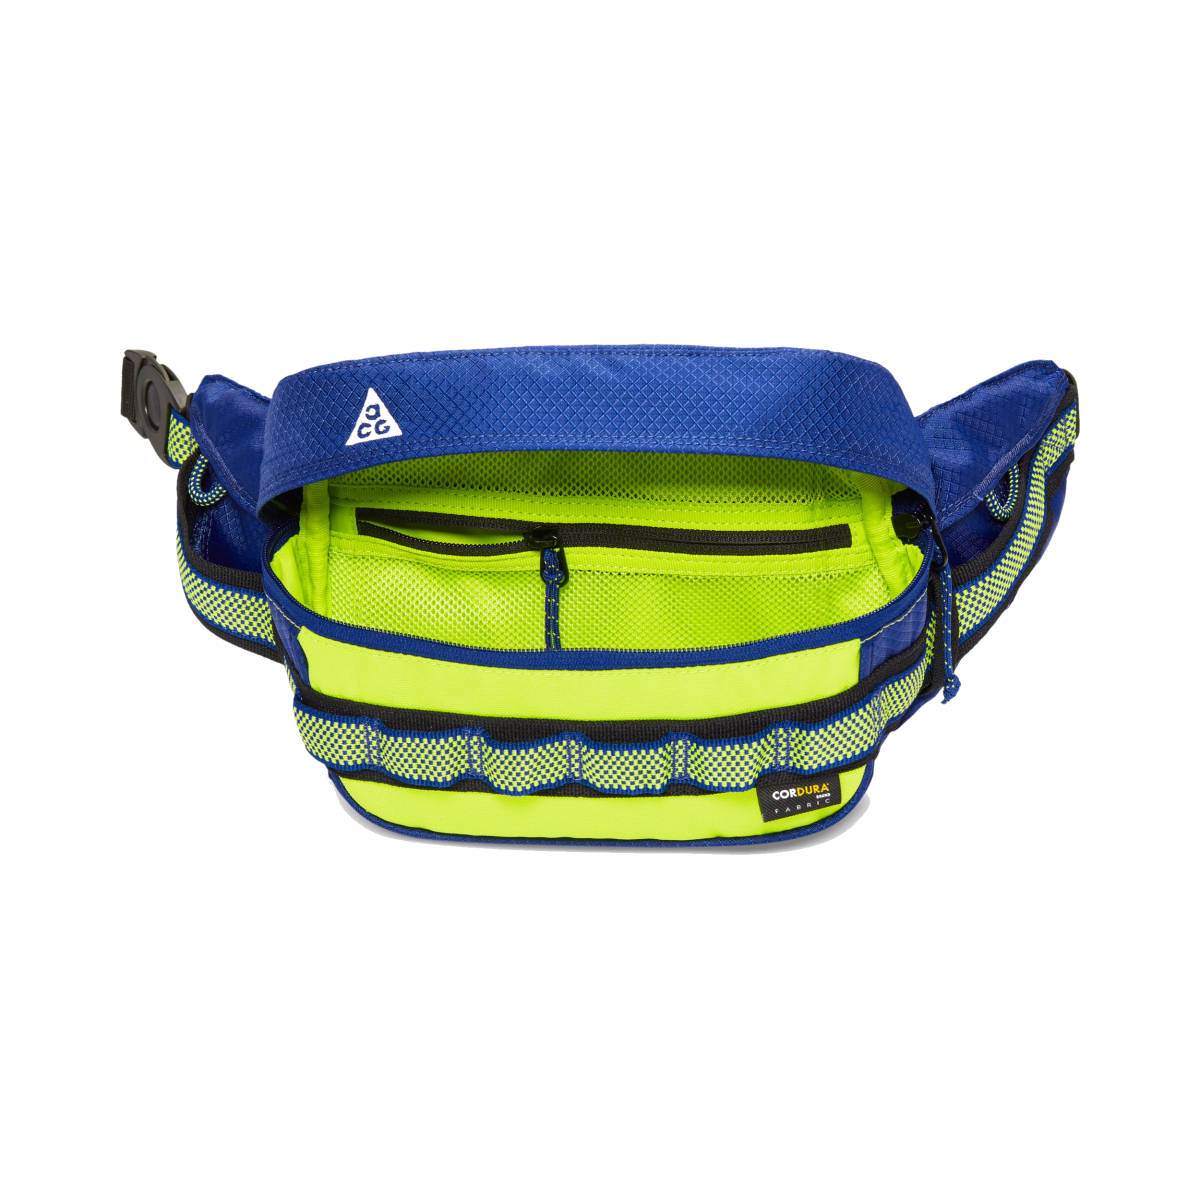 # Nike acgkaru -stroke small item back blue / yellow new goods NIKE ACG KARST SMALL ITEM BAG waist bag CK7511-455